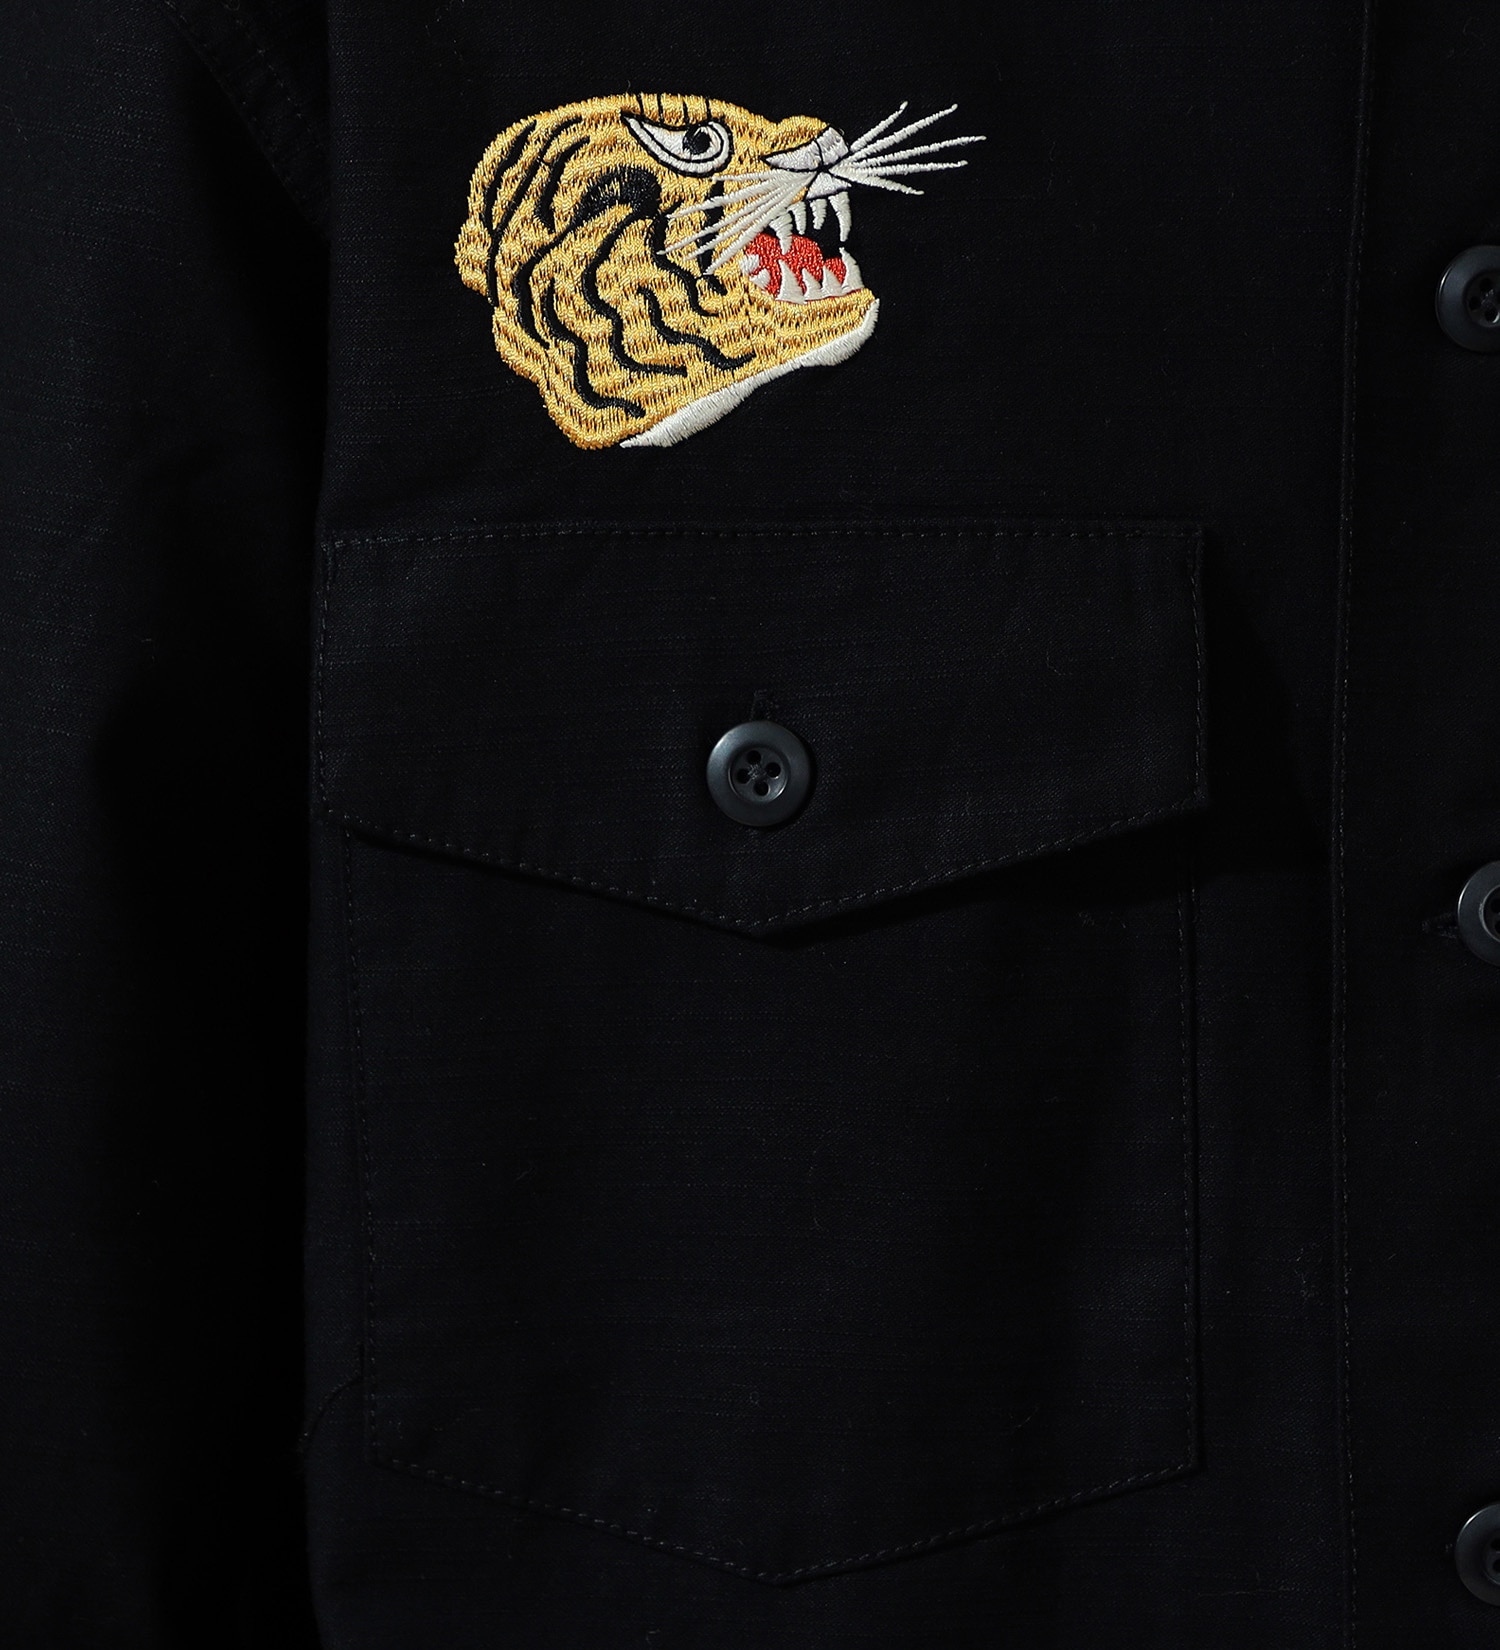 ALPHA(アルファ)のユーティリティシャツ/ベトジャン刺繍 長袖（VIETNAM）|トップス/シャツ/ブラウス/メンズ|ブラック